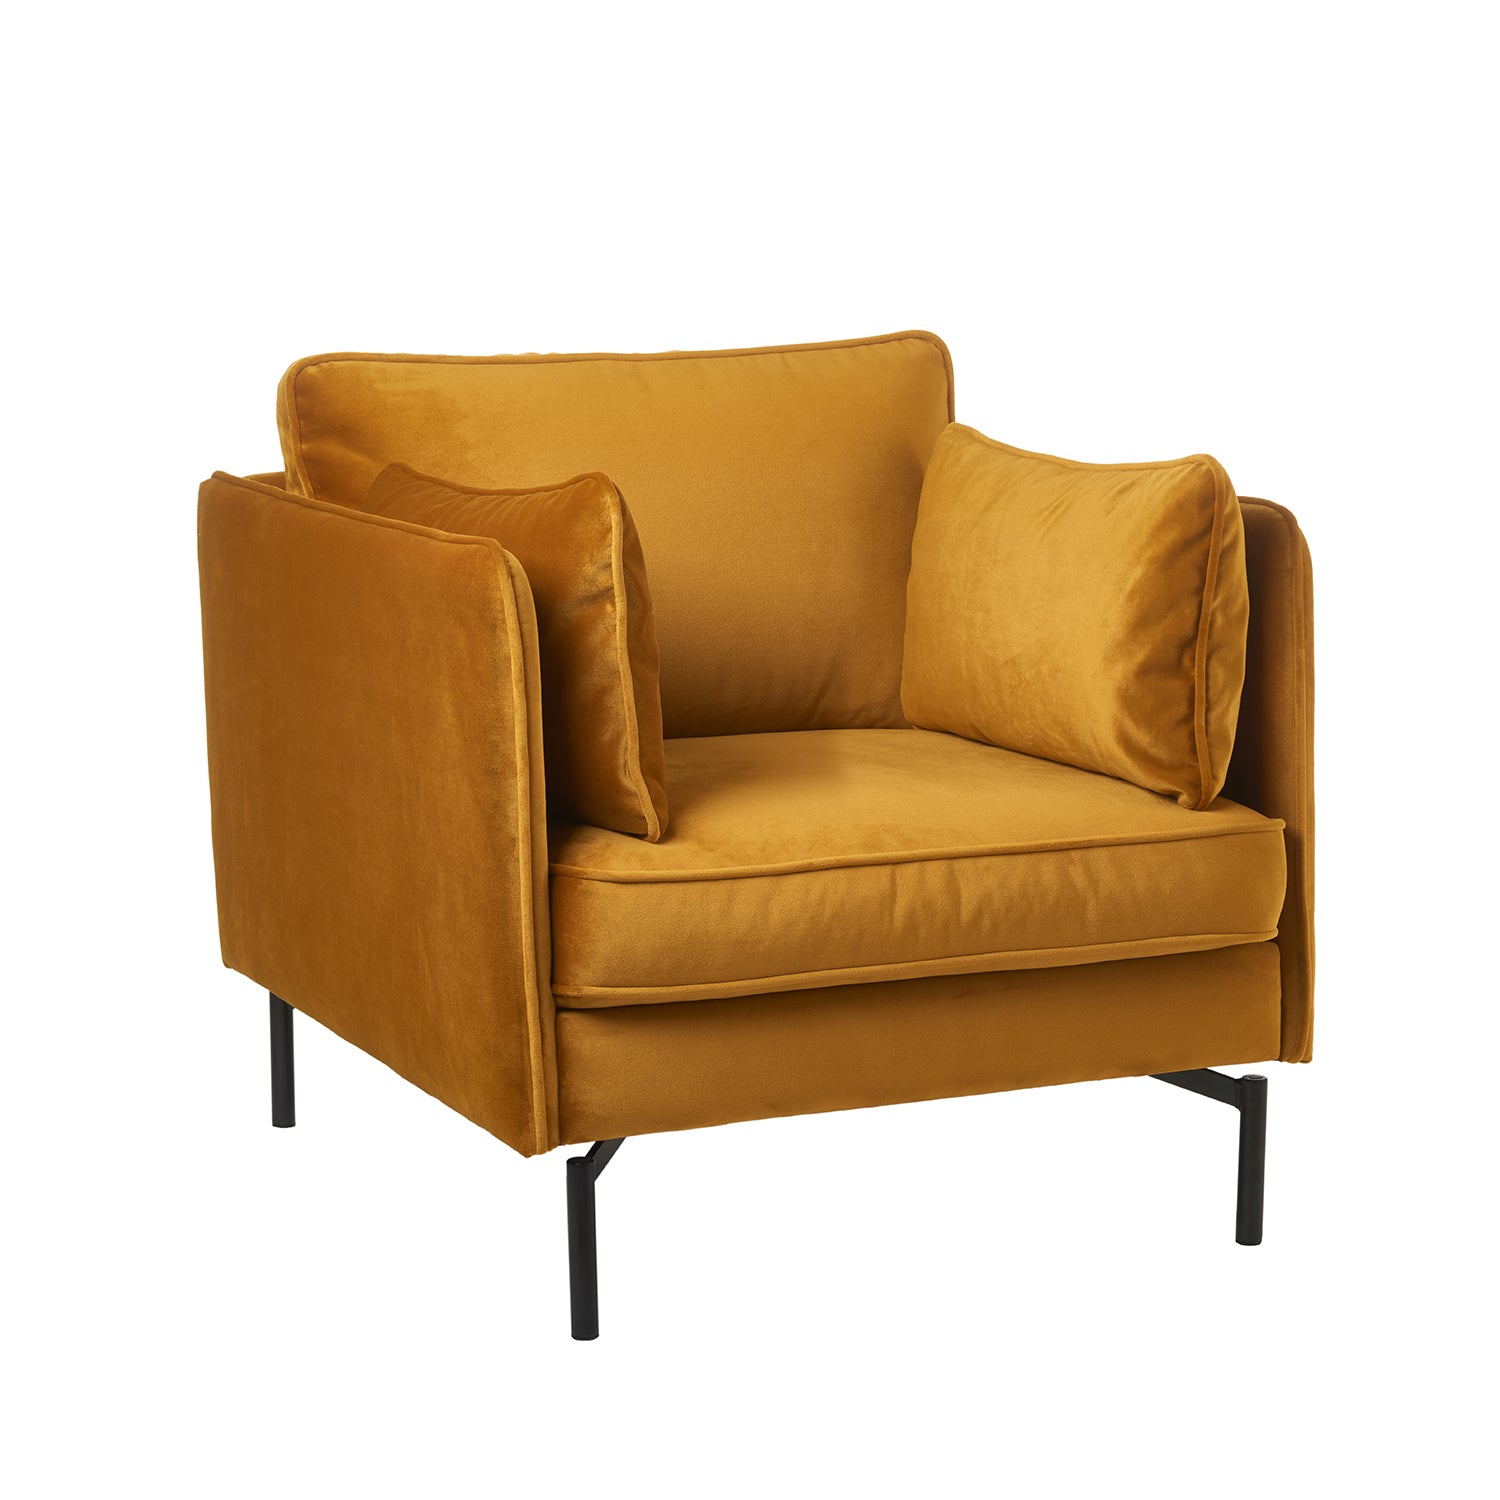 PPno.2 Lounge Chair - The Design Choice